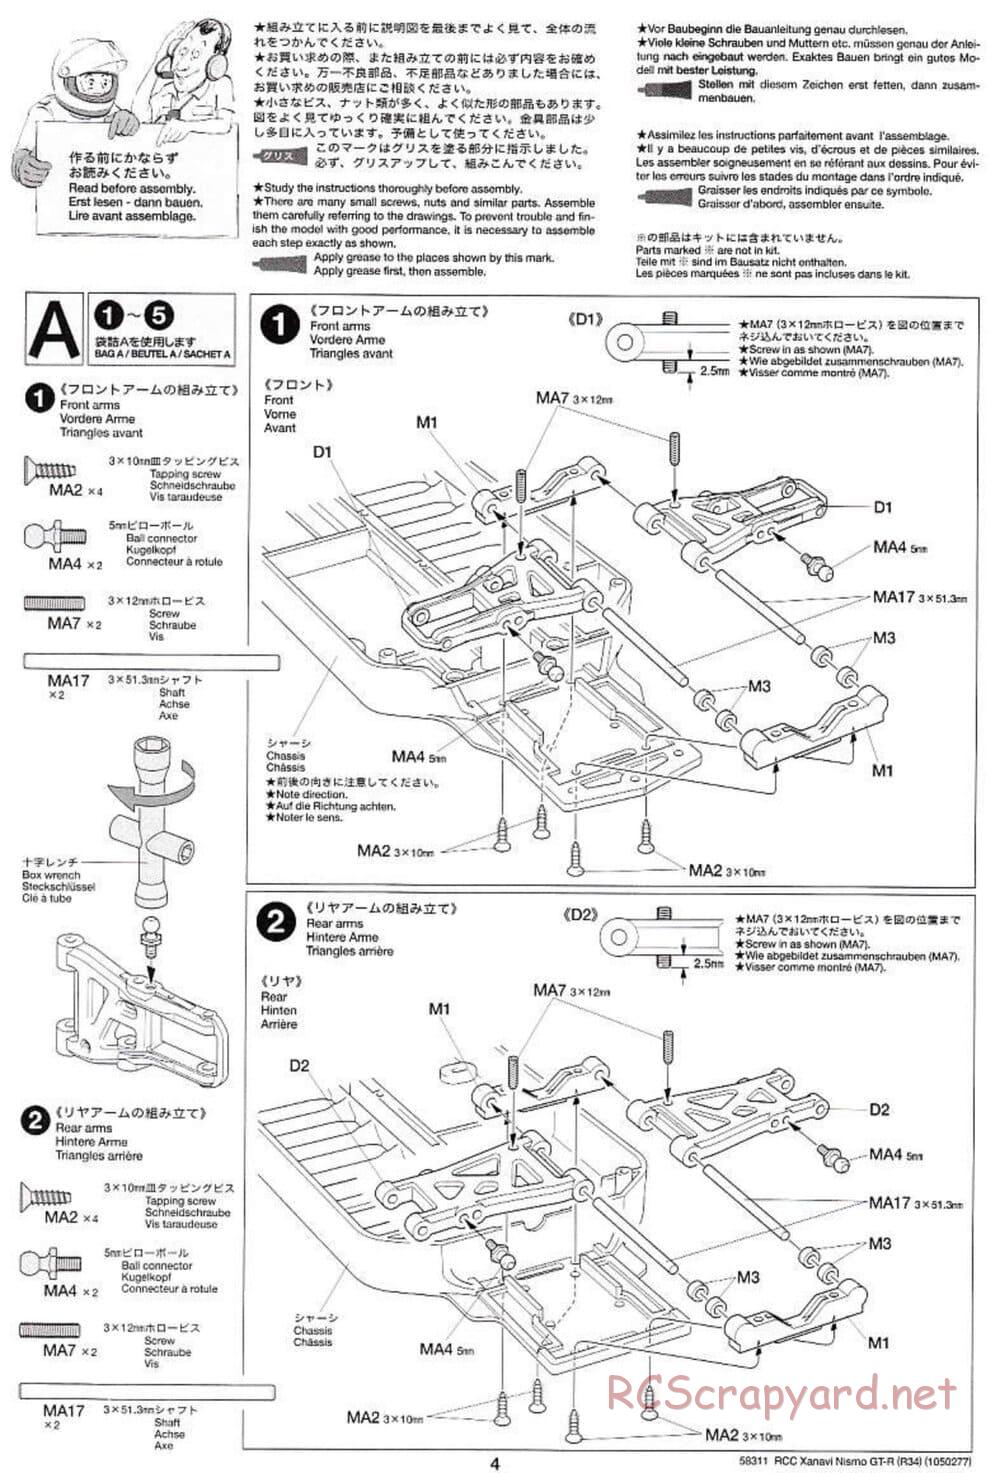 Tamiya - Xanavi Nismo GT-R (R34) - TB-02 Chassis - Manual - Page 4